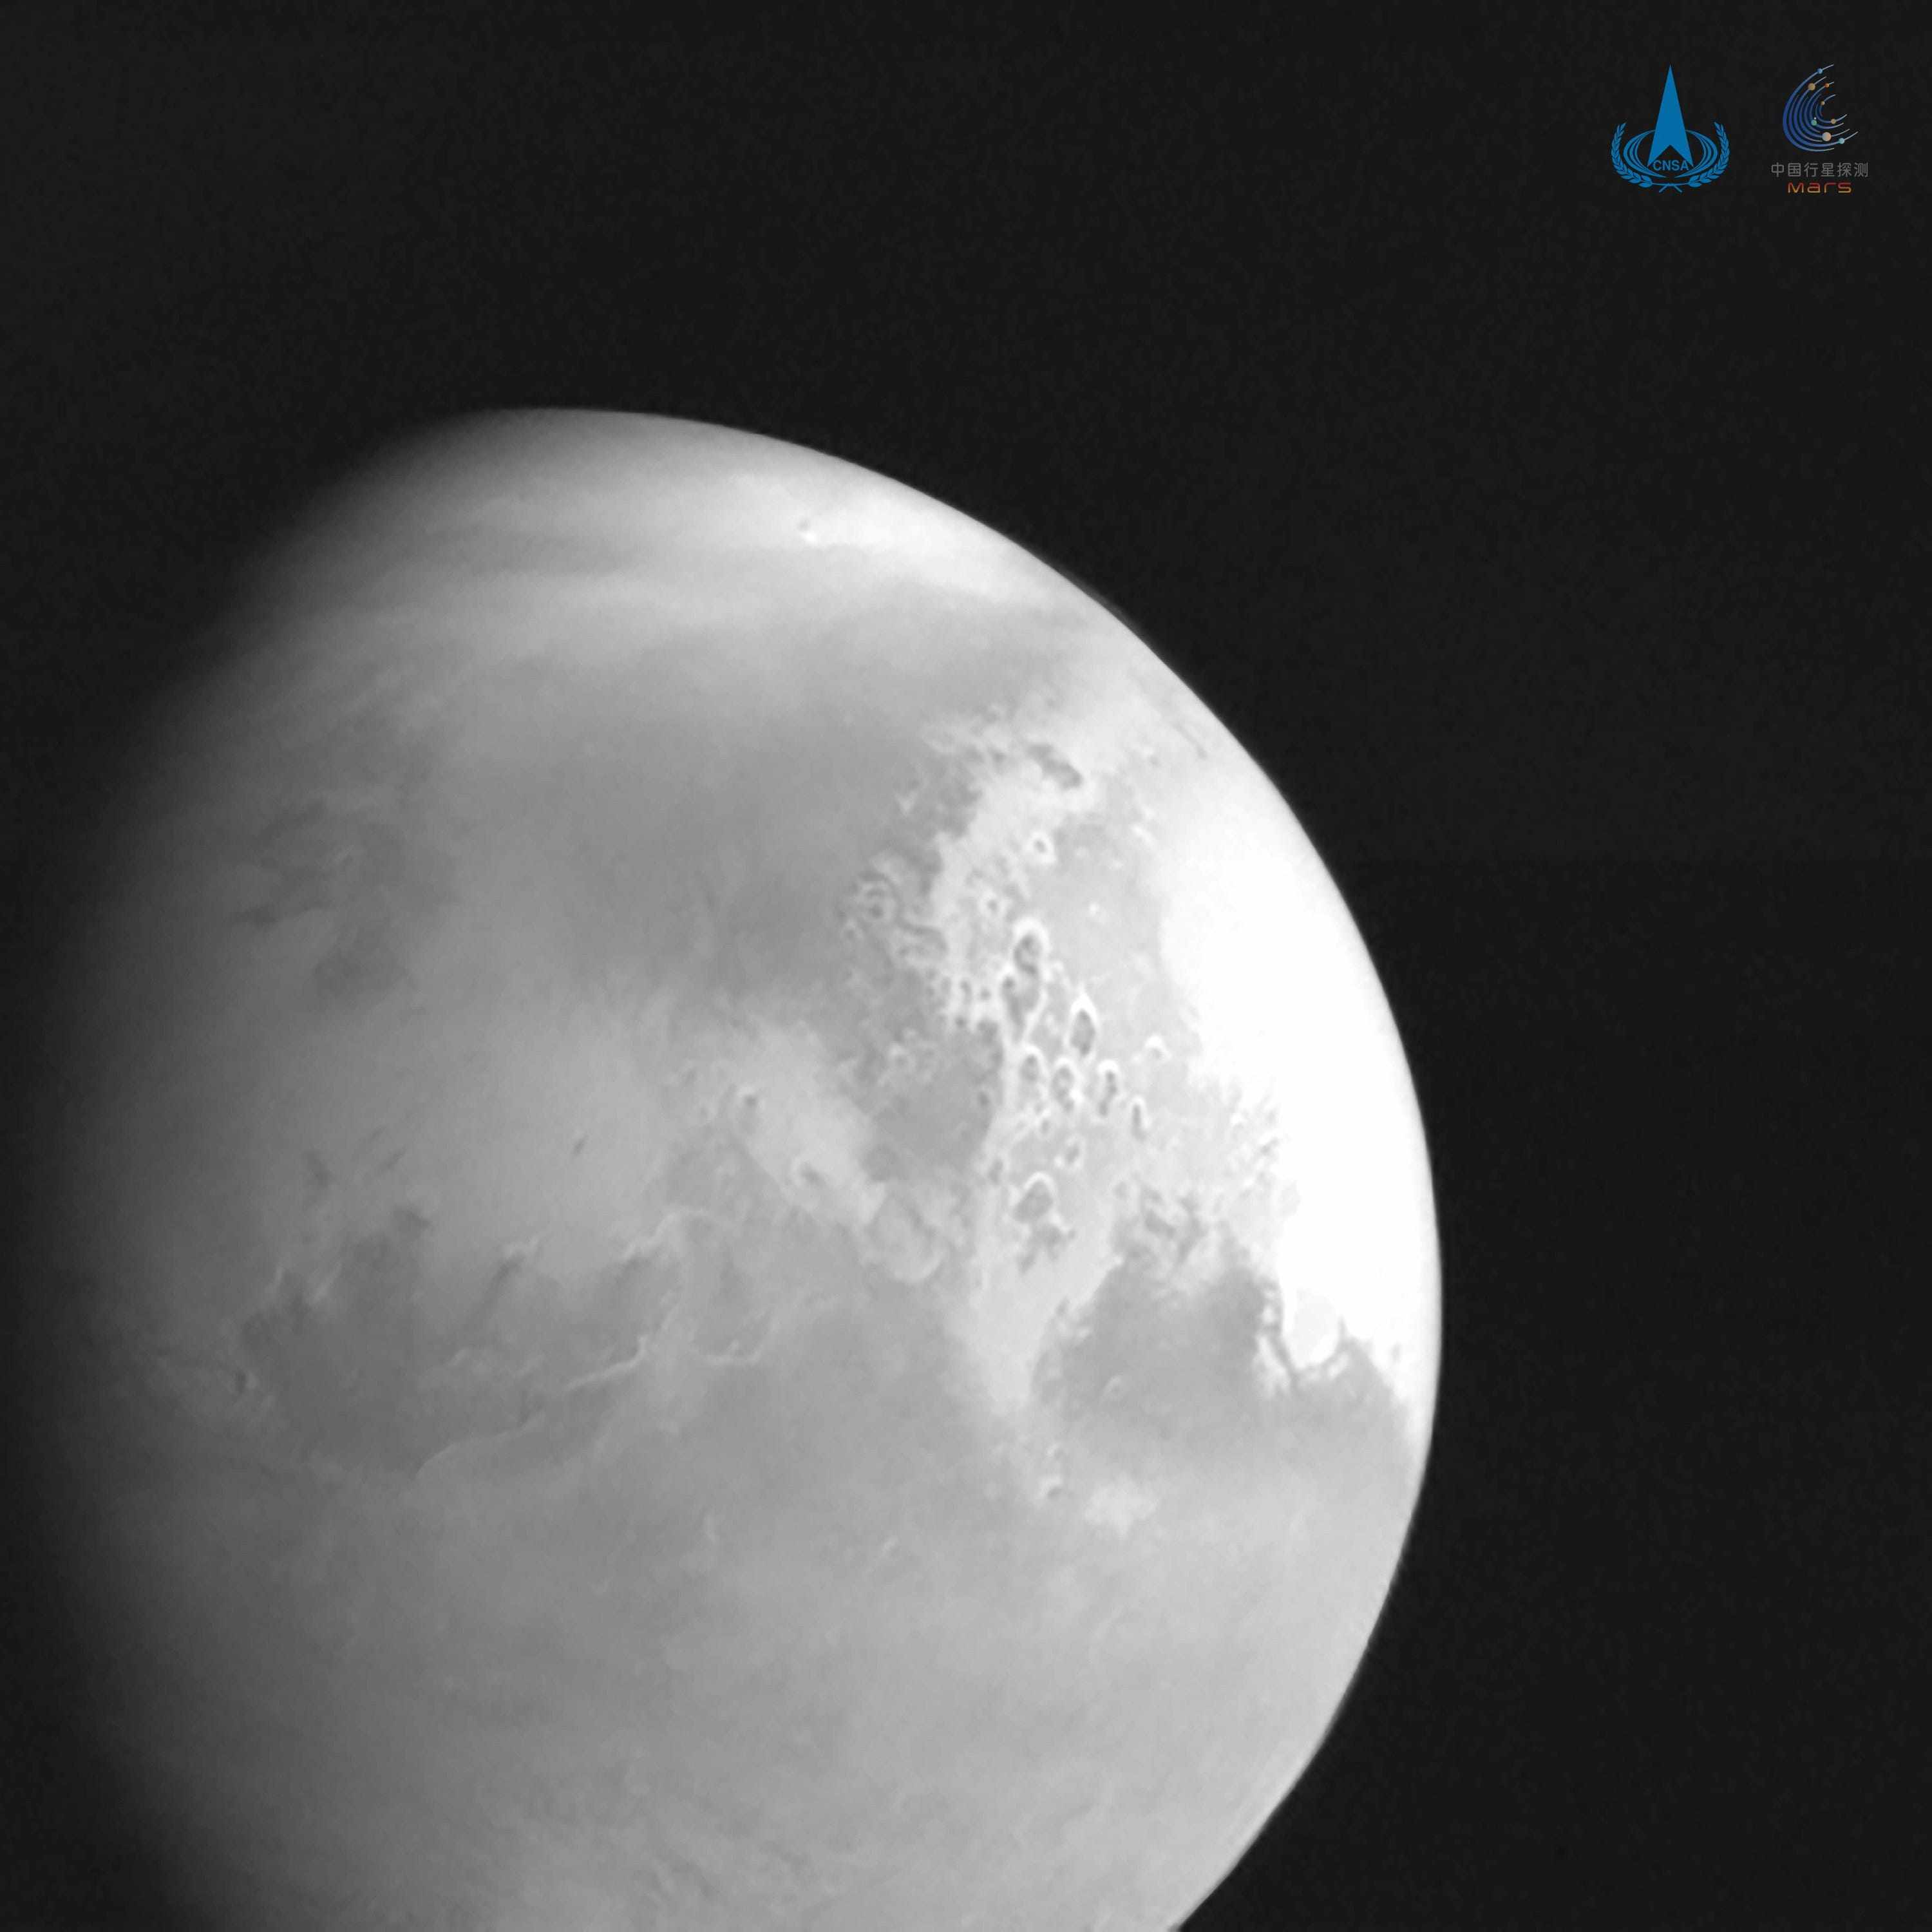 china probe mars photo planet